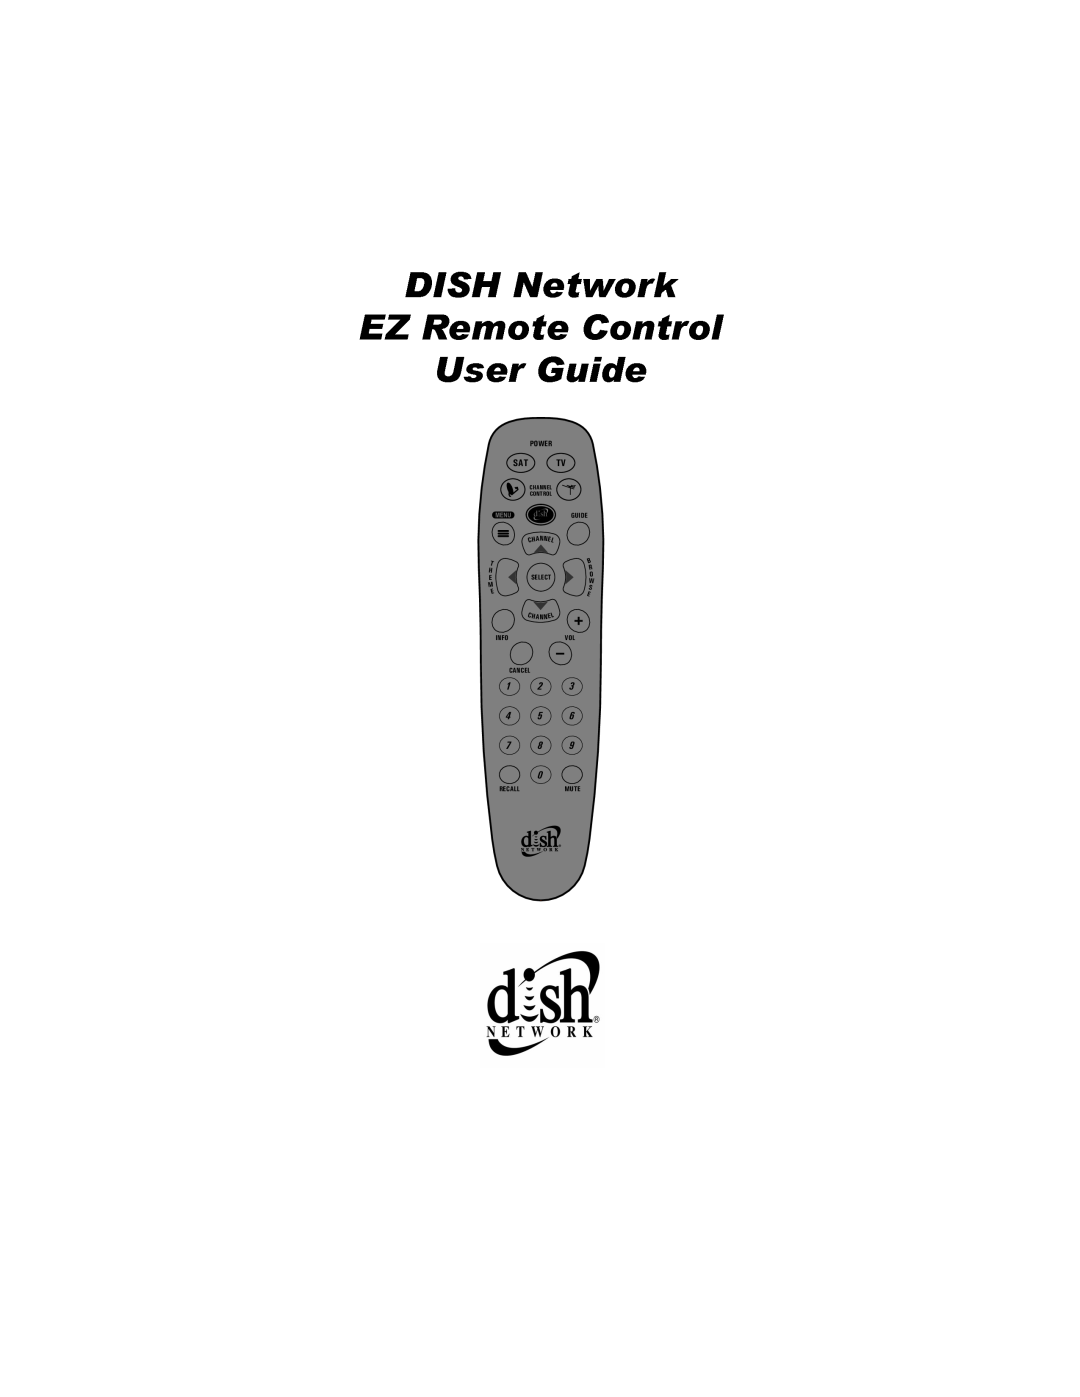 Dish Network manual EZDISHCANCELtwrkE, RemoteControlUserSELECT, 1 2 4 5 7 8, Sat Tv, Power, Nnel, Channel Control 